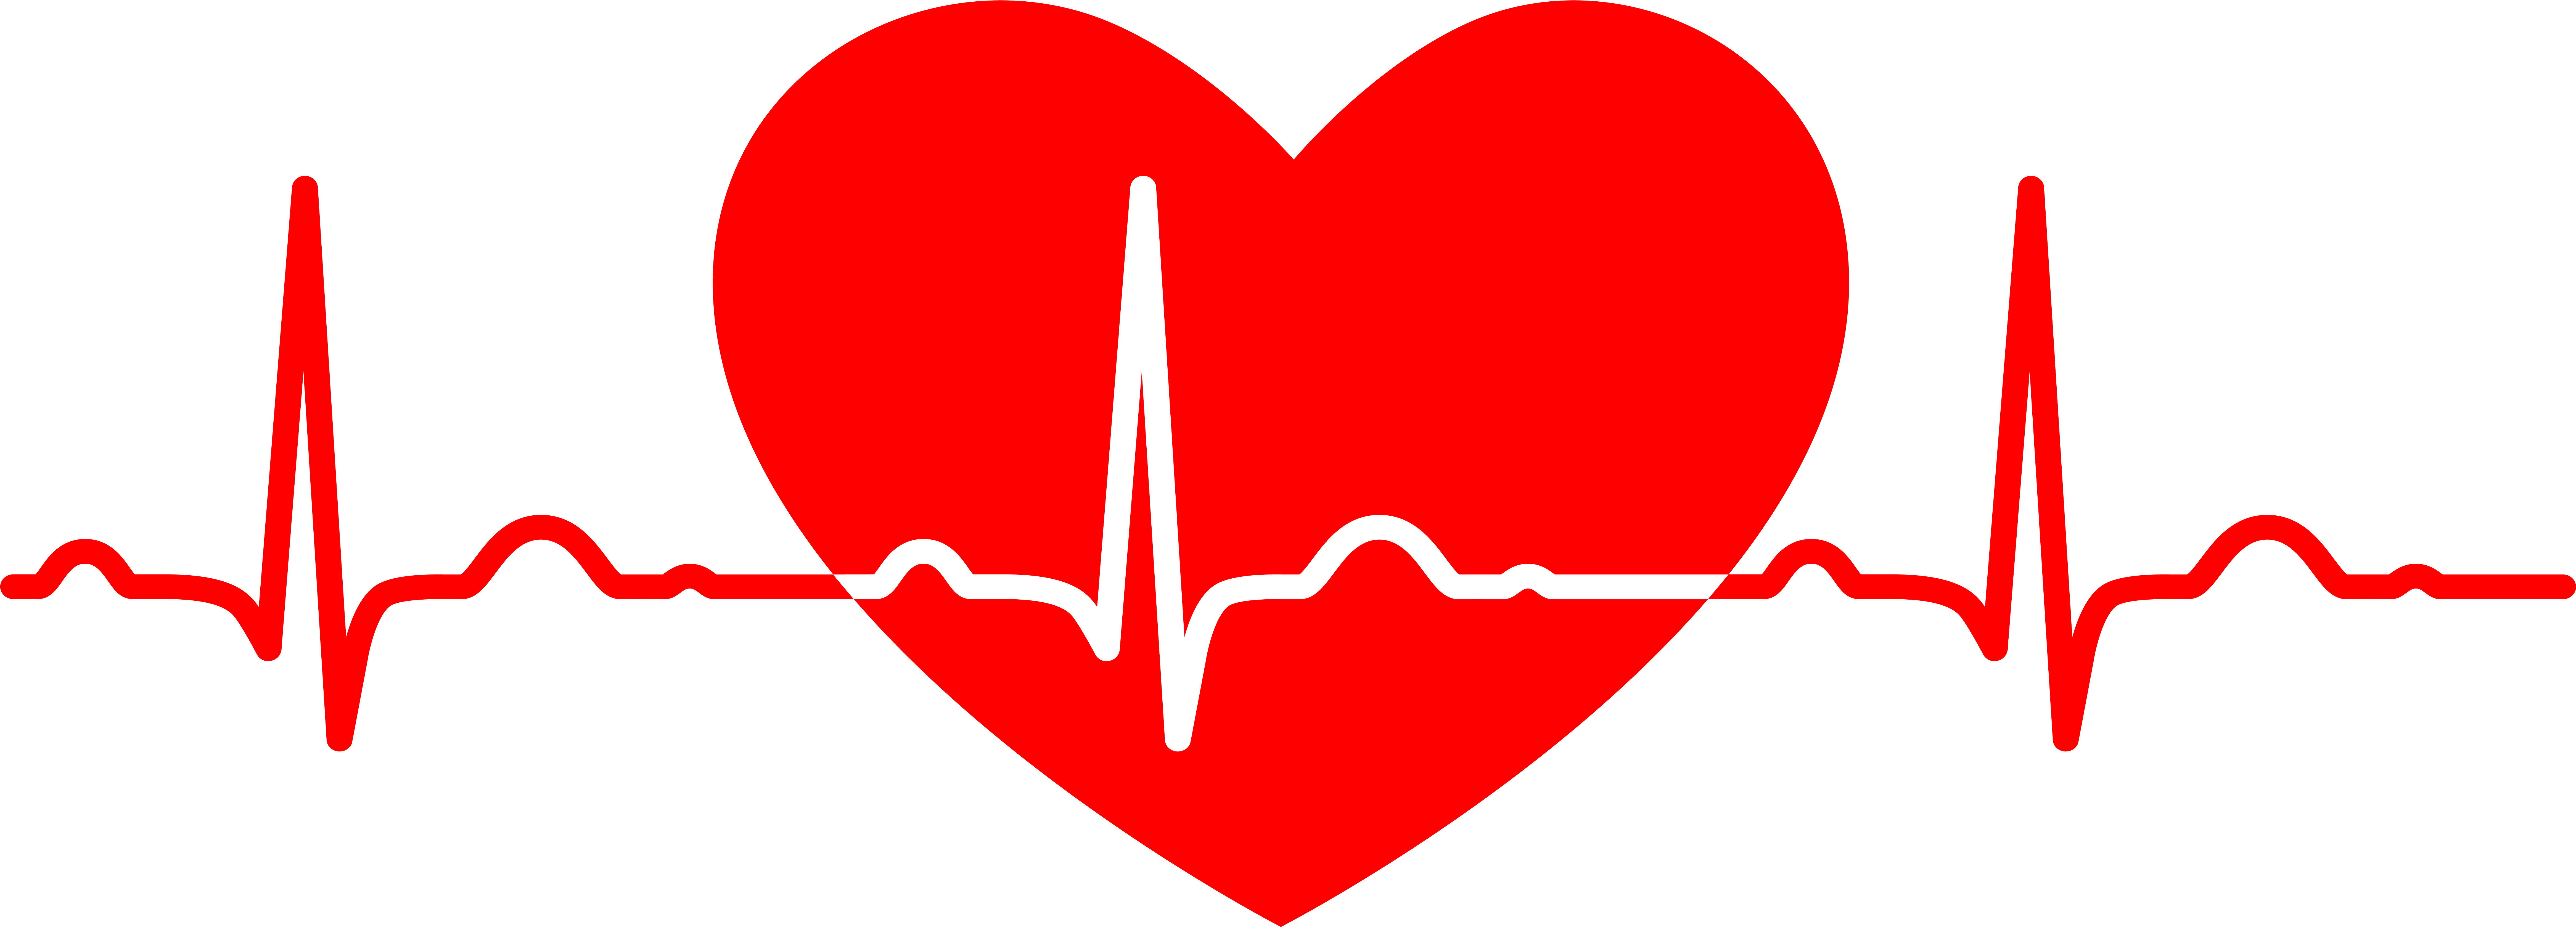 Экг сердца москва. Кардиограмма. Кардиограмма сердца. ЭКГ сердца. Картодиаграмма сердца.